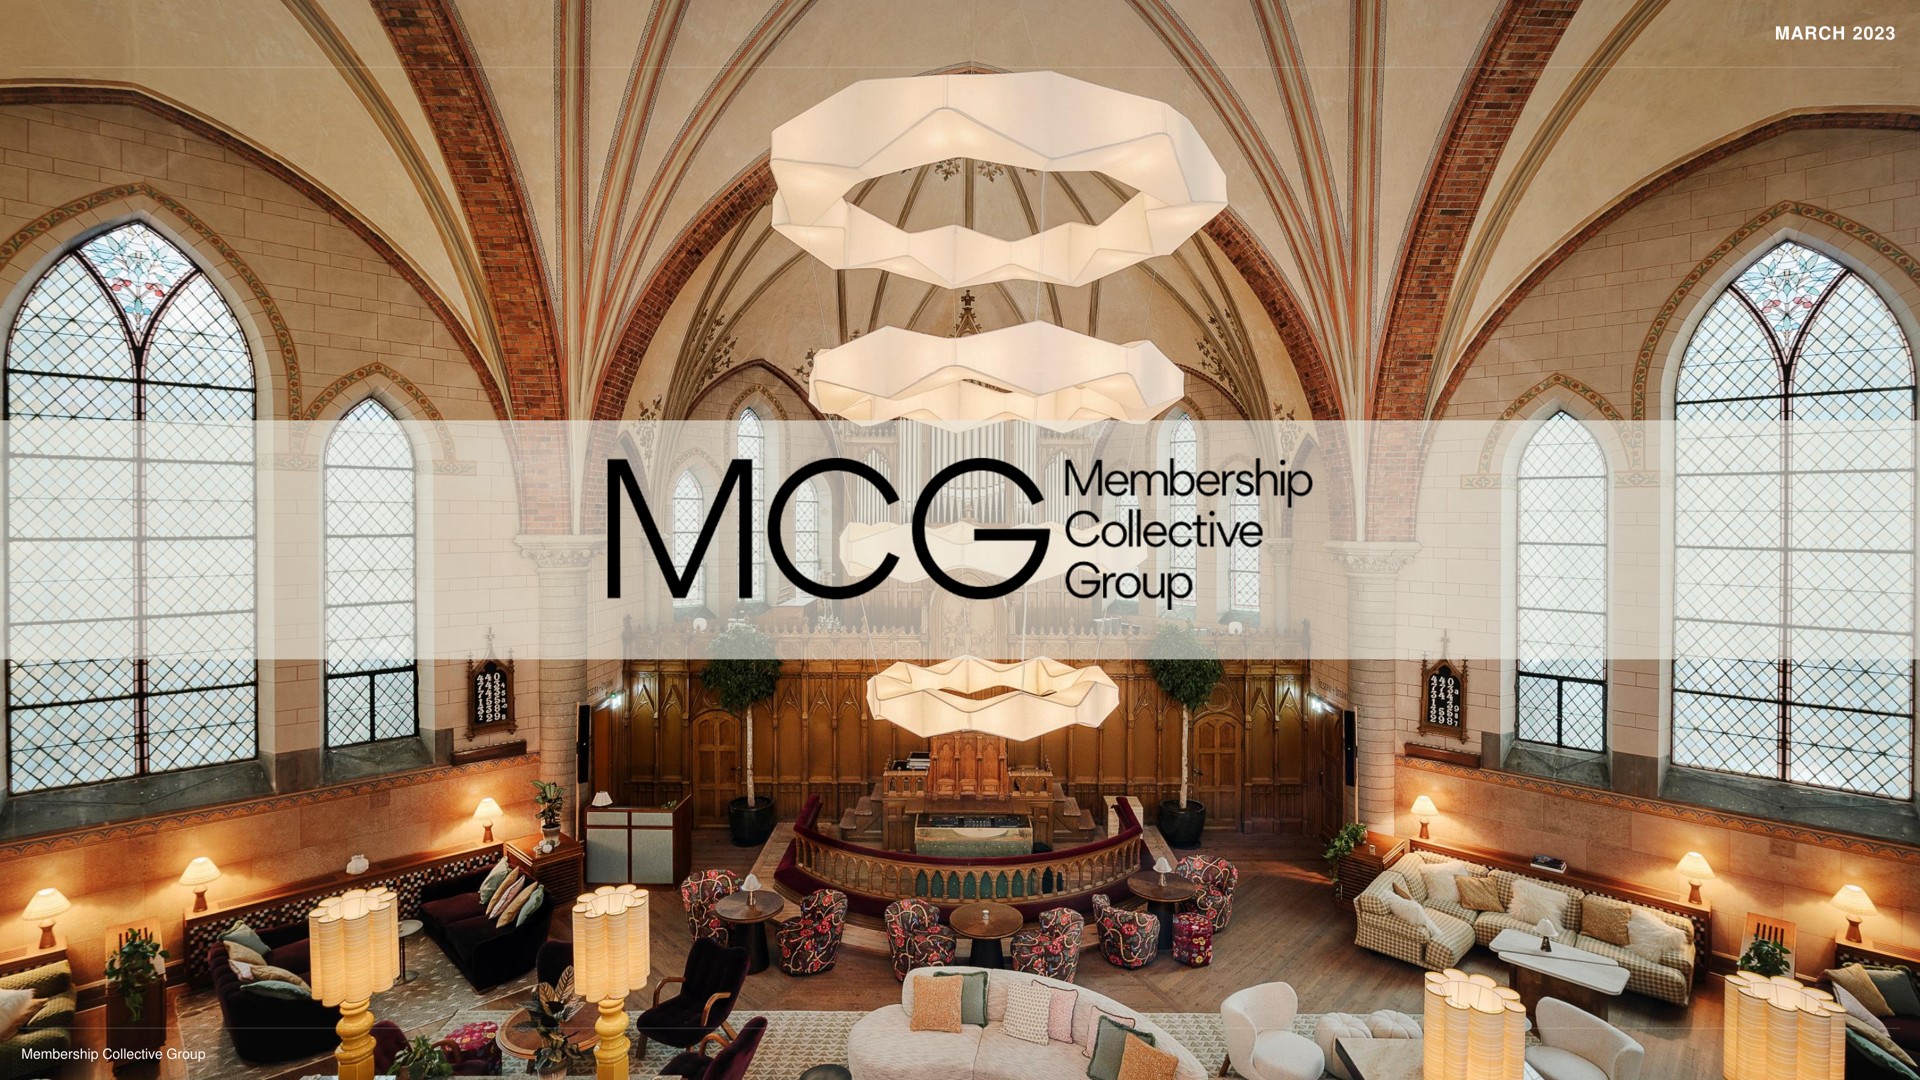 membership collective group | Membership Collective Group